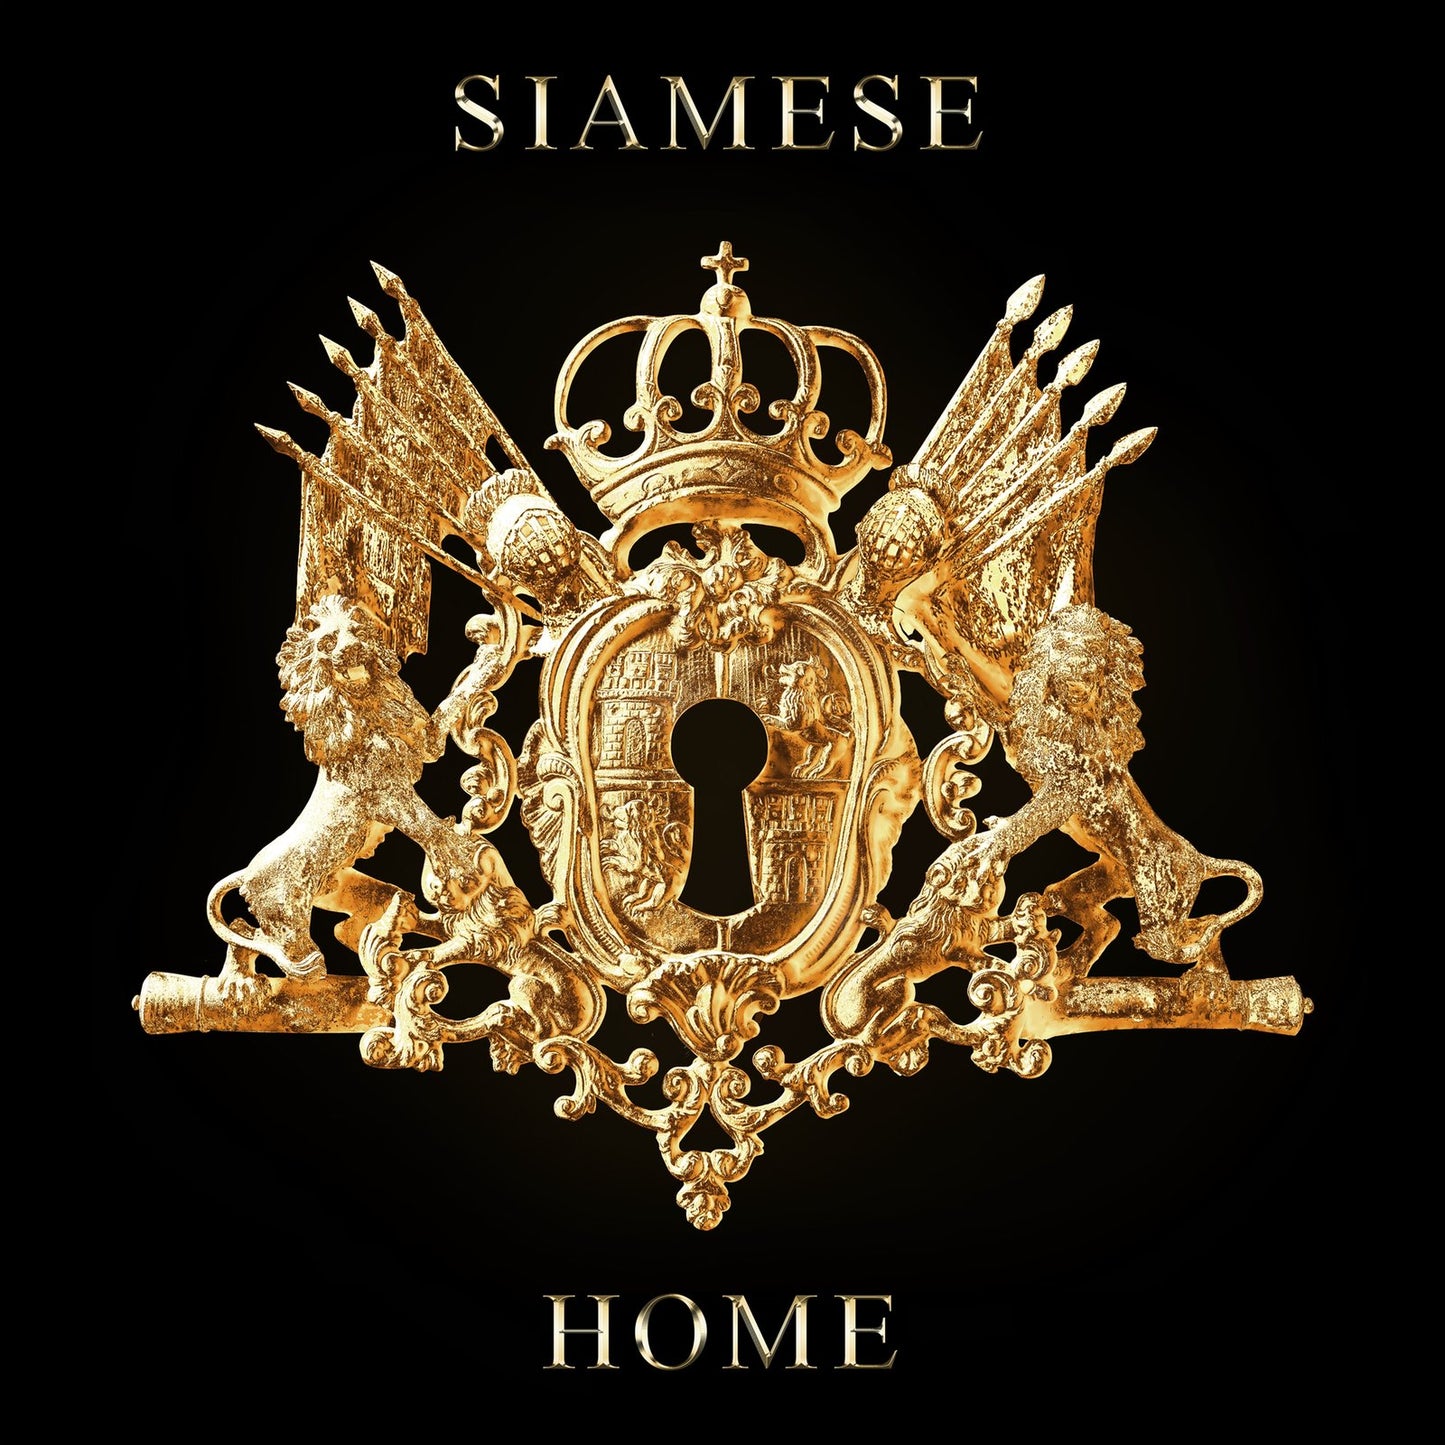 Siamese "Home" LP